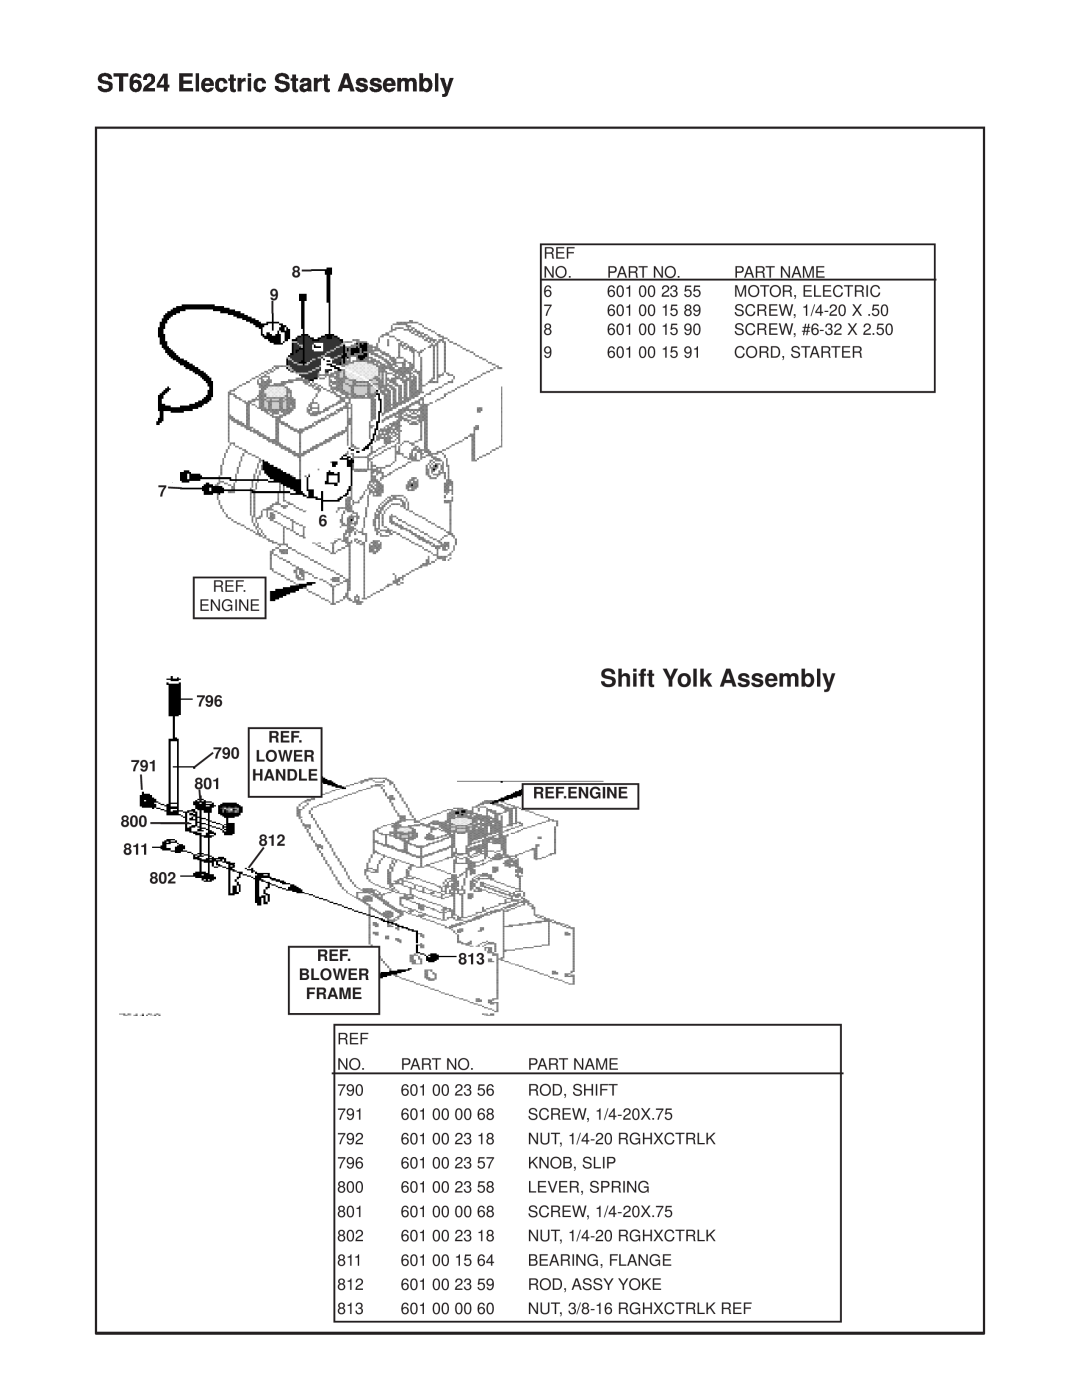 Husqvarna ST624E manual ST624 Electric Start Assembly, Shift Yolk Assembly, Lower, Ref.Engine, 800 811, Blower Frame 